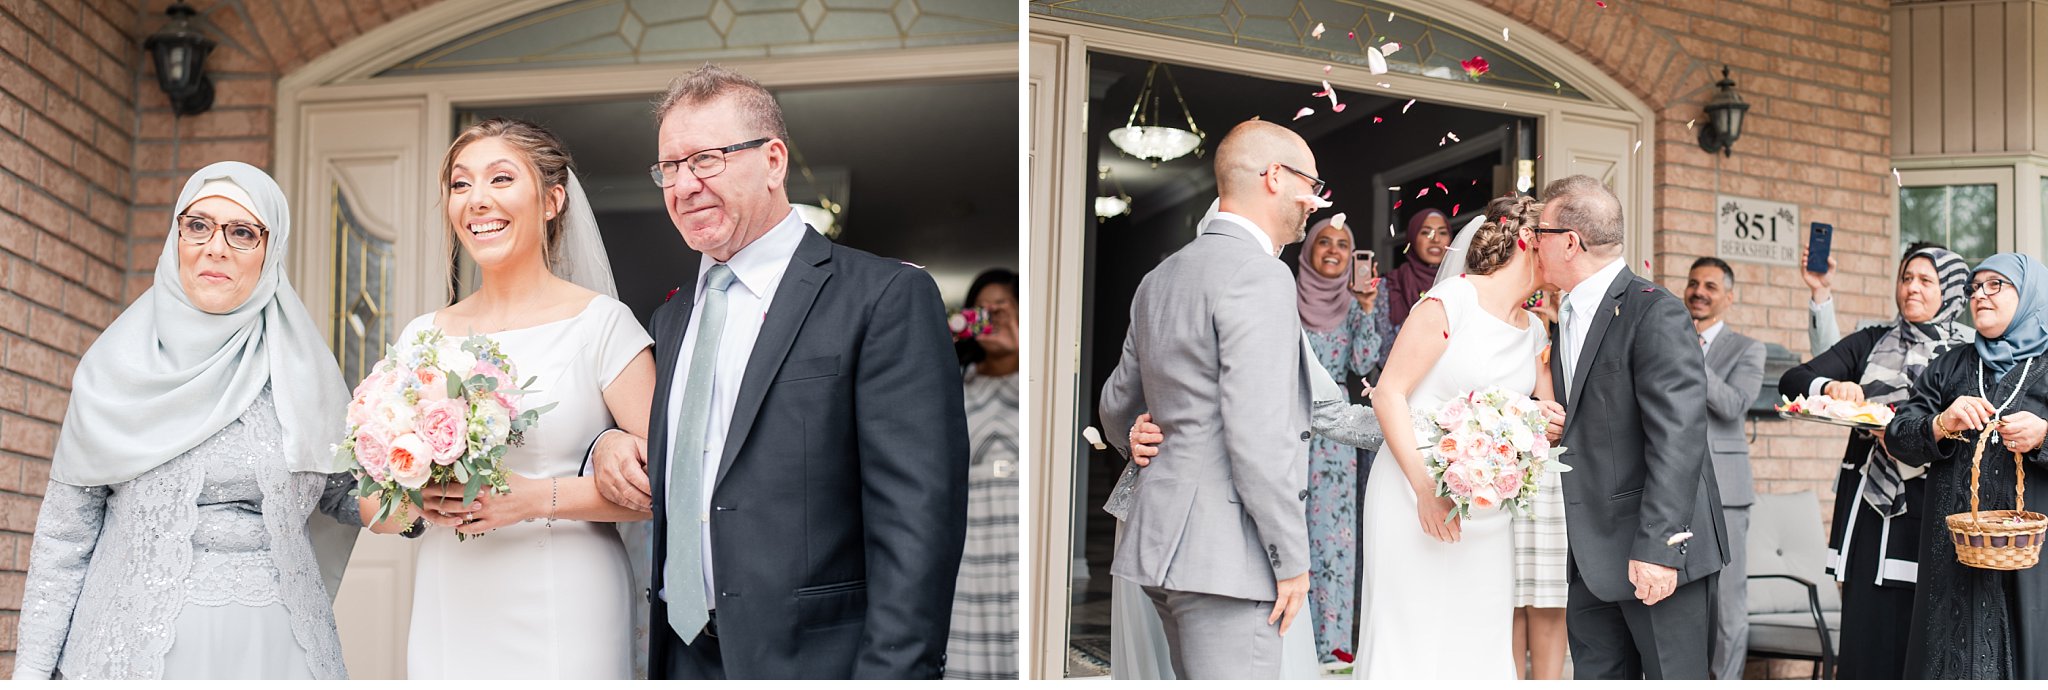 first look at an arab wedding